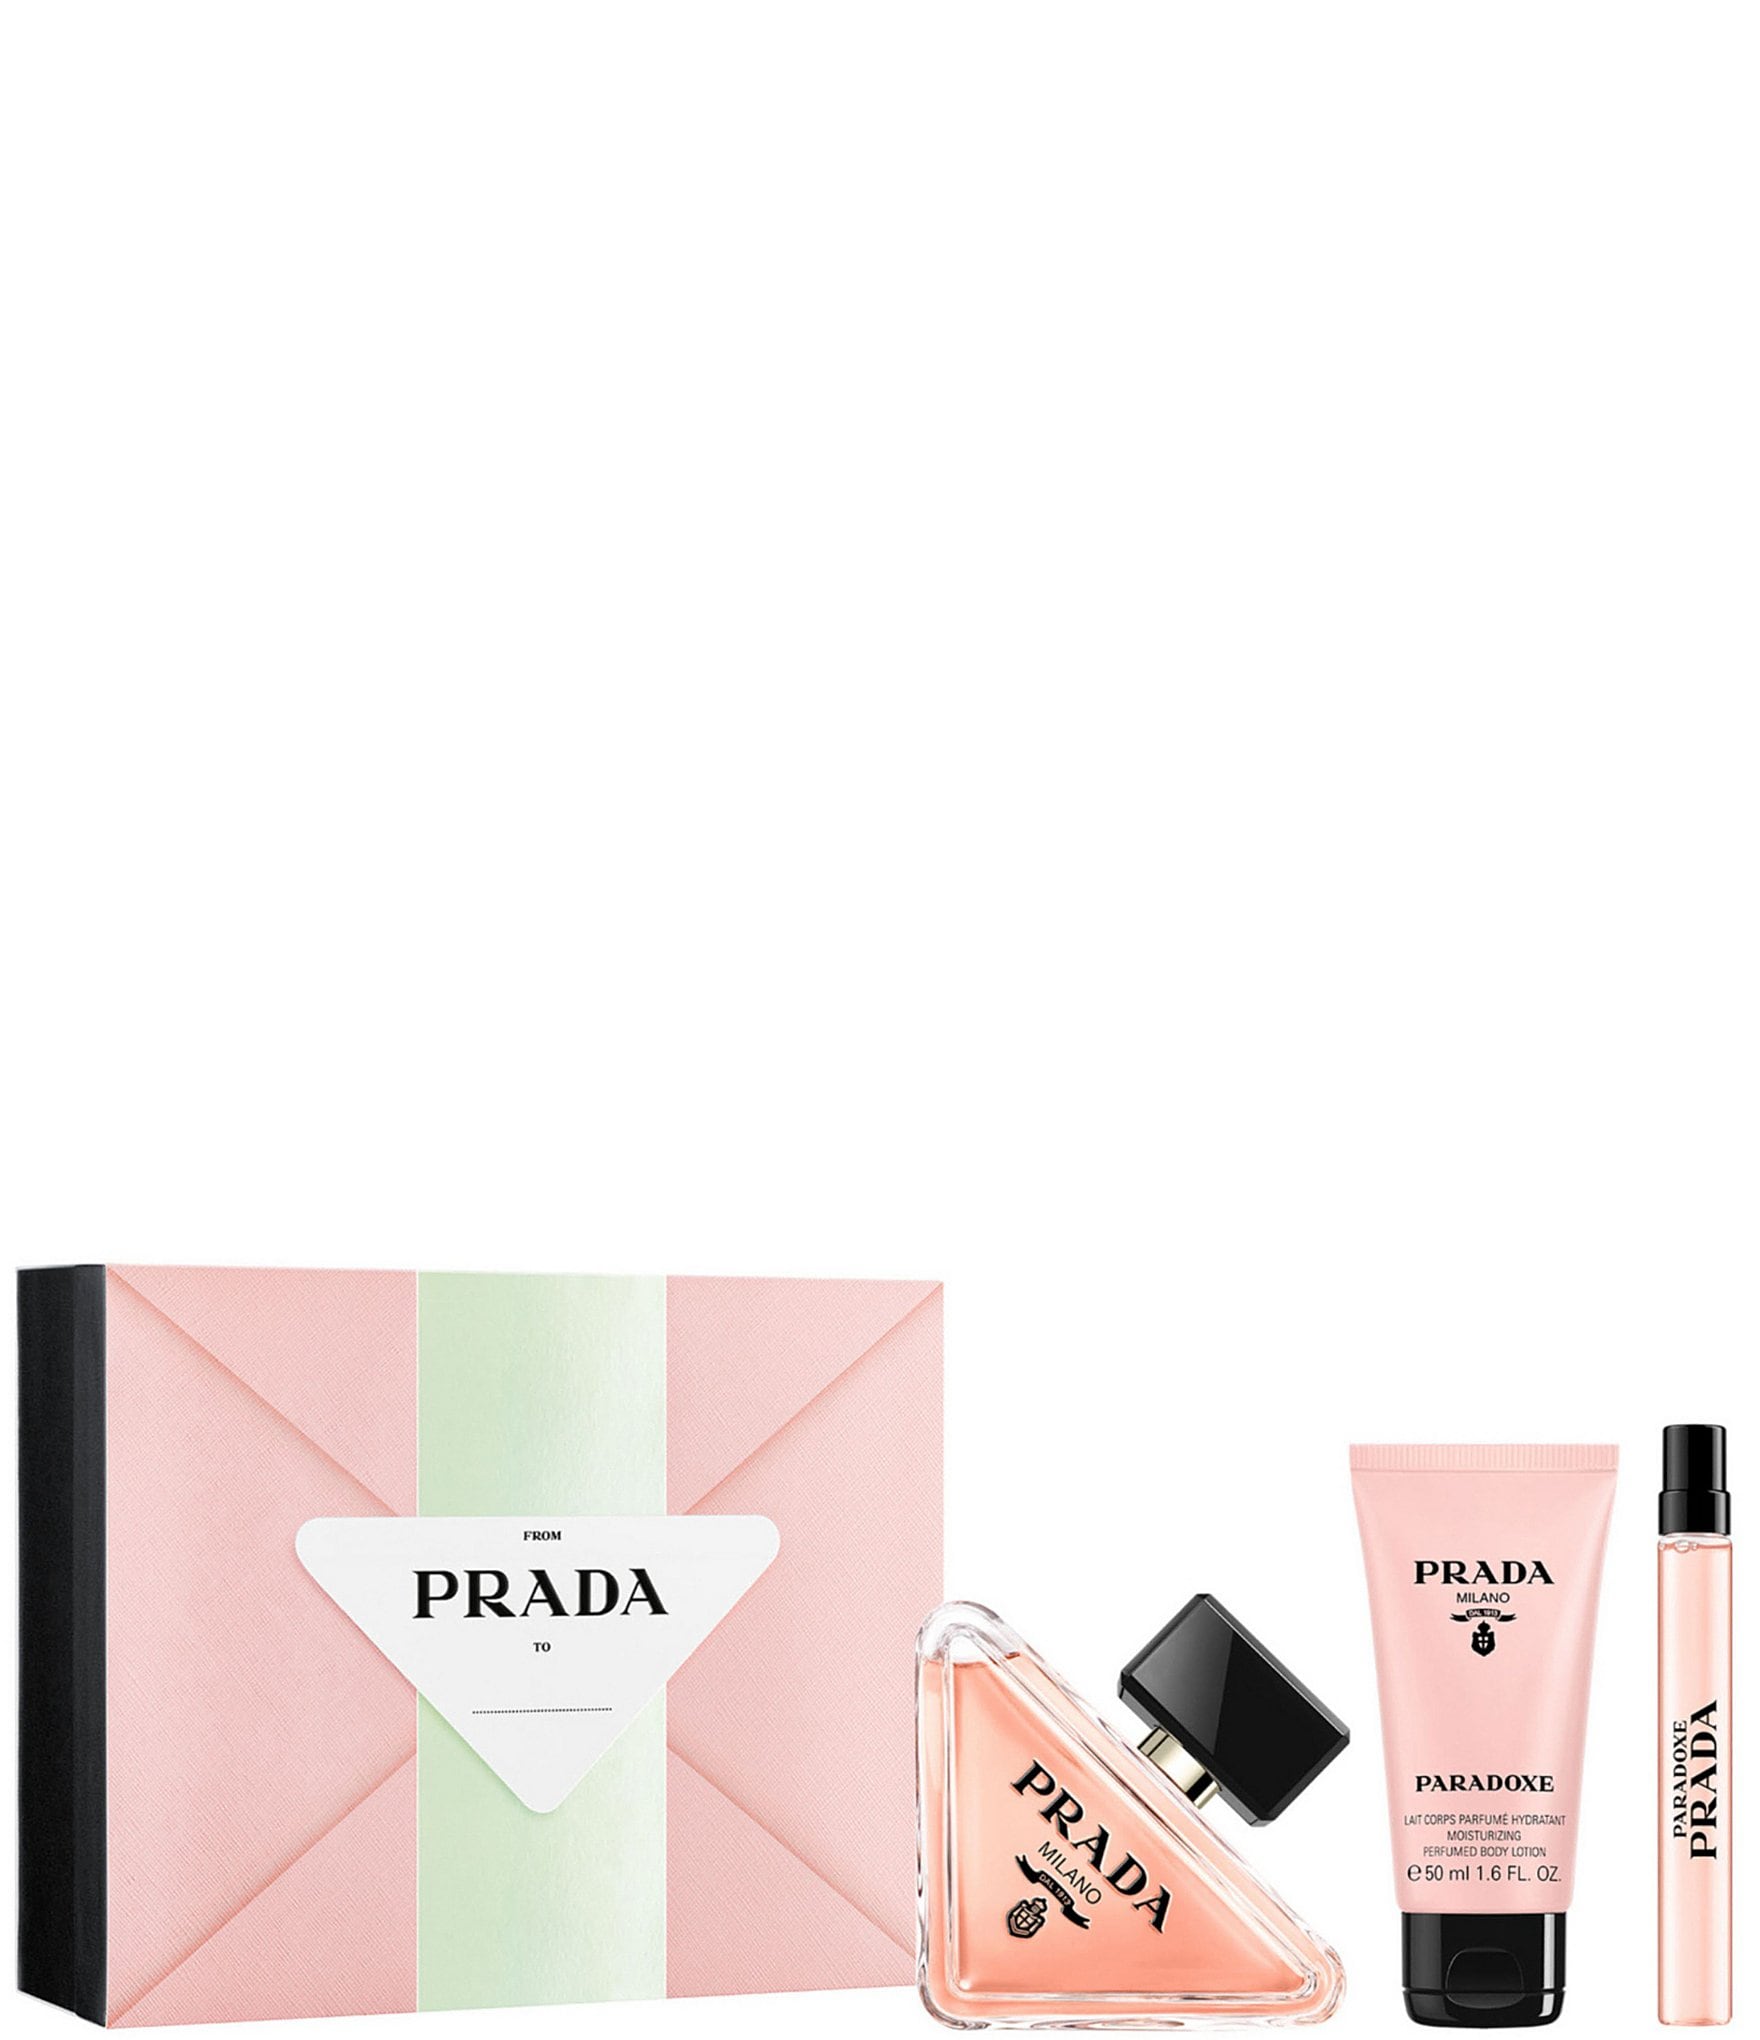 Prada Paradoxe Eau de Parfum 3-Piece Gift Set | Dillard's